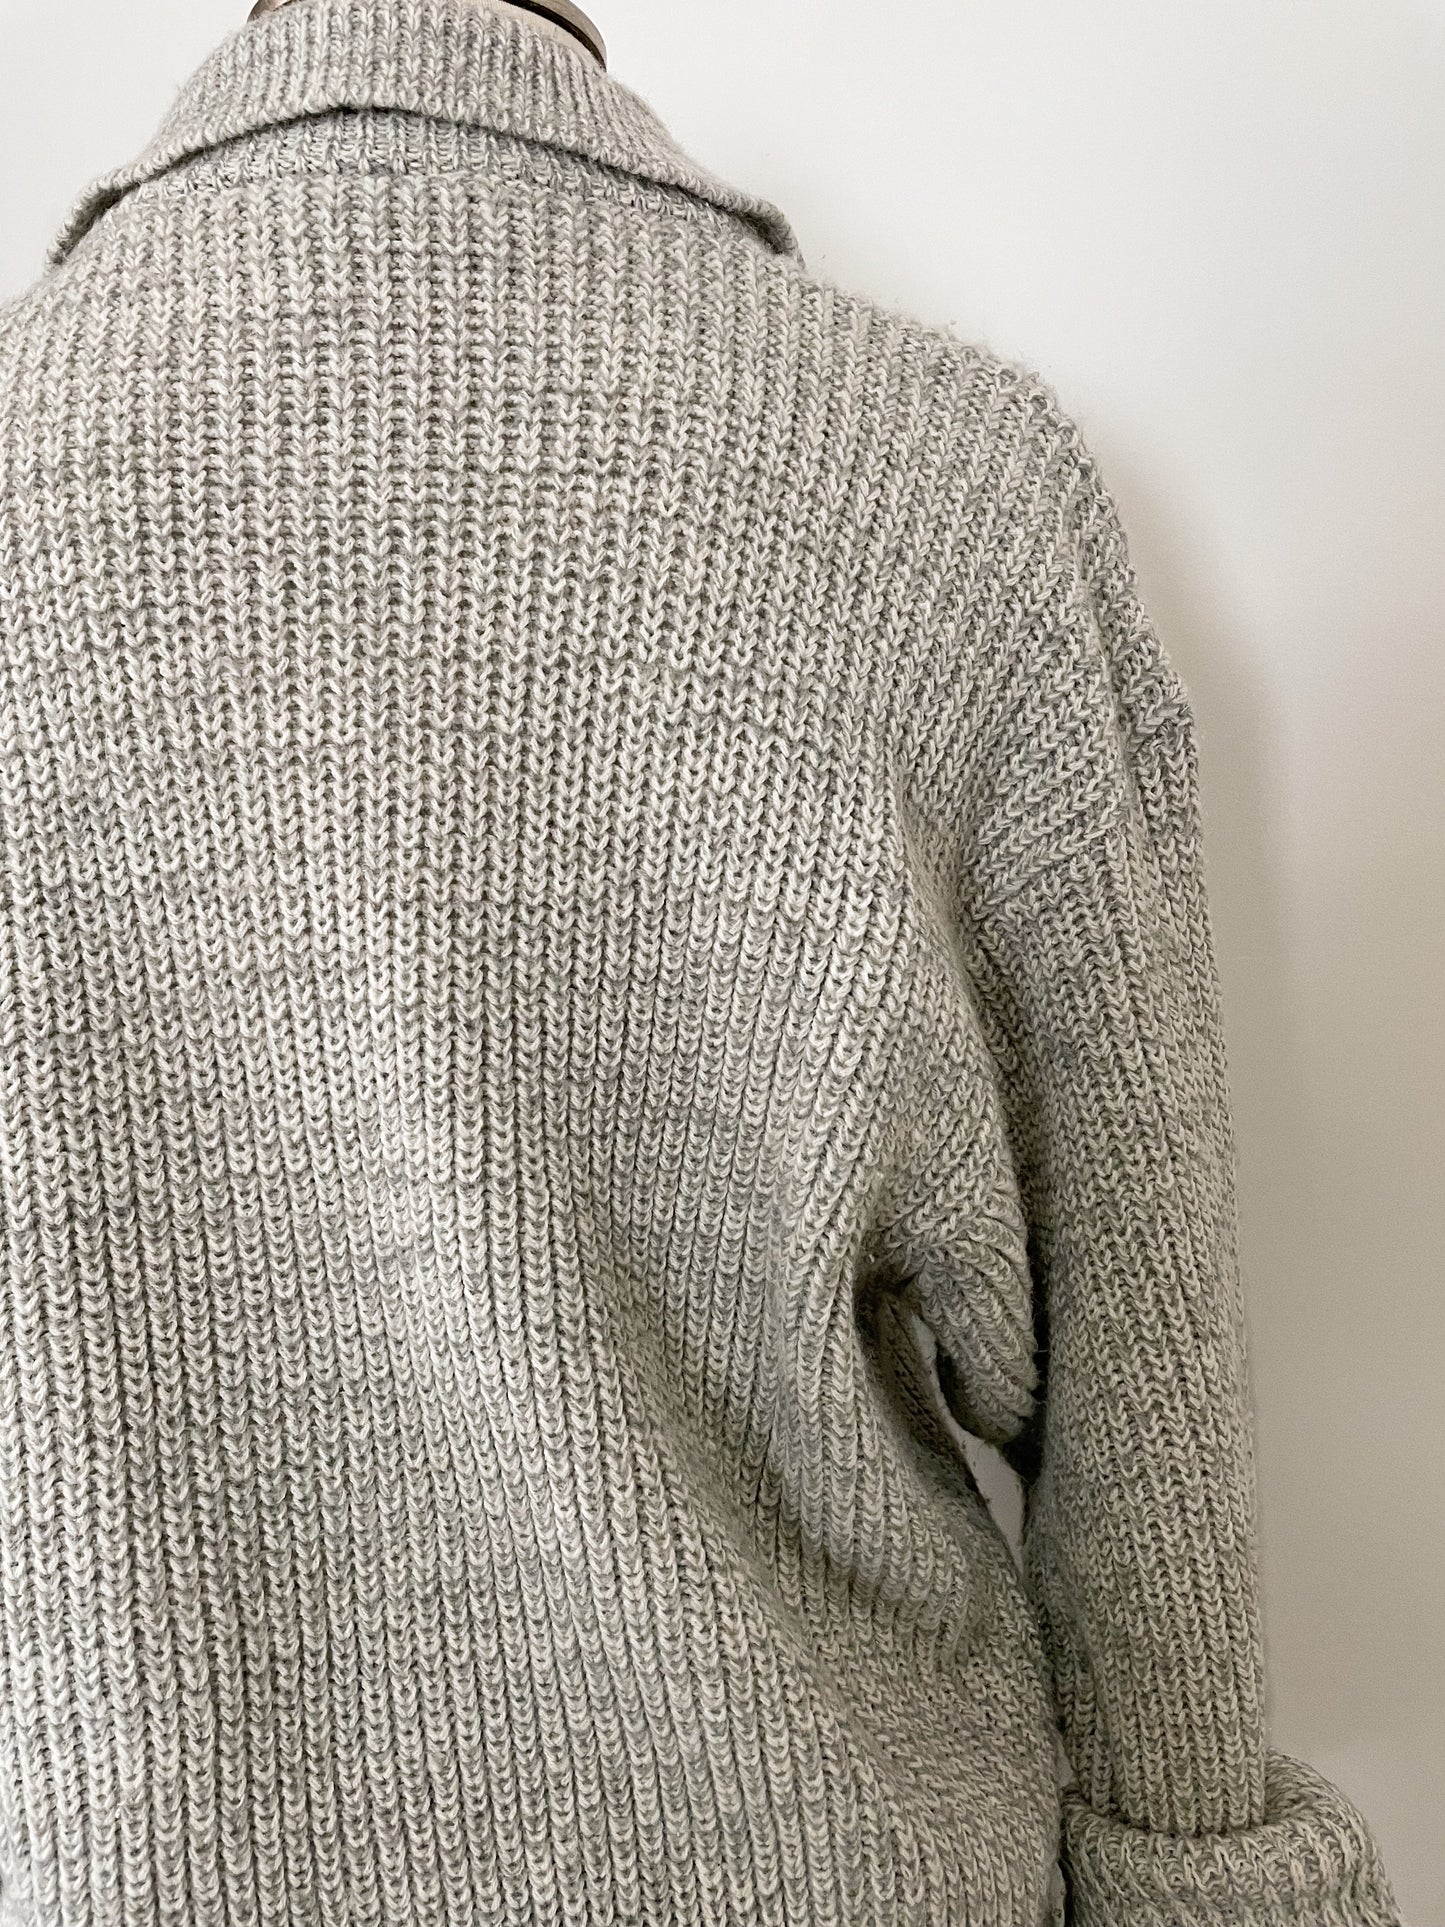 Joise Collar Tunic Sweater